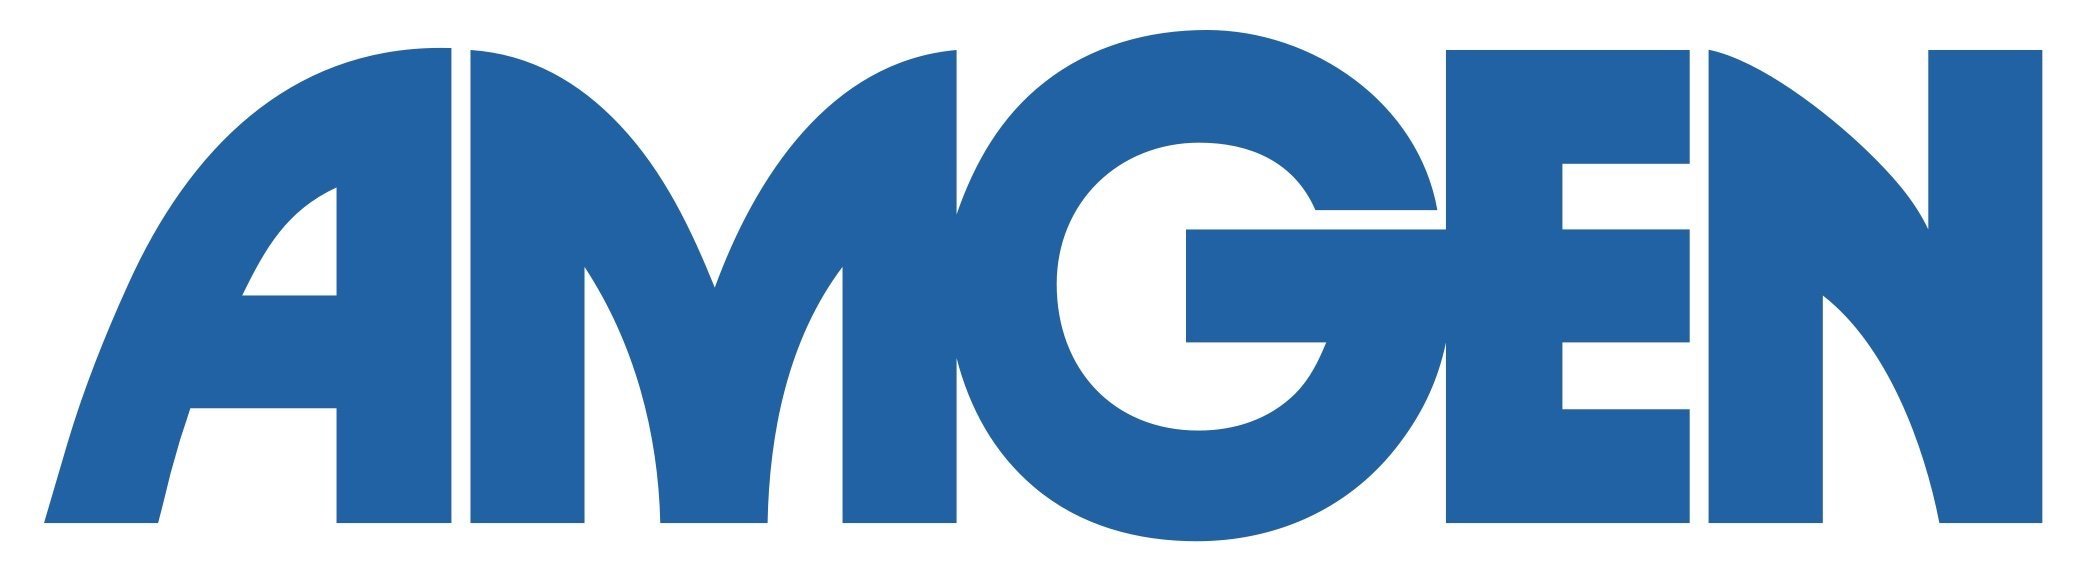 Amgen+logo.jpg